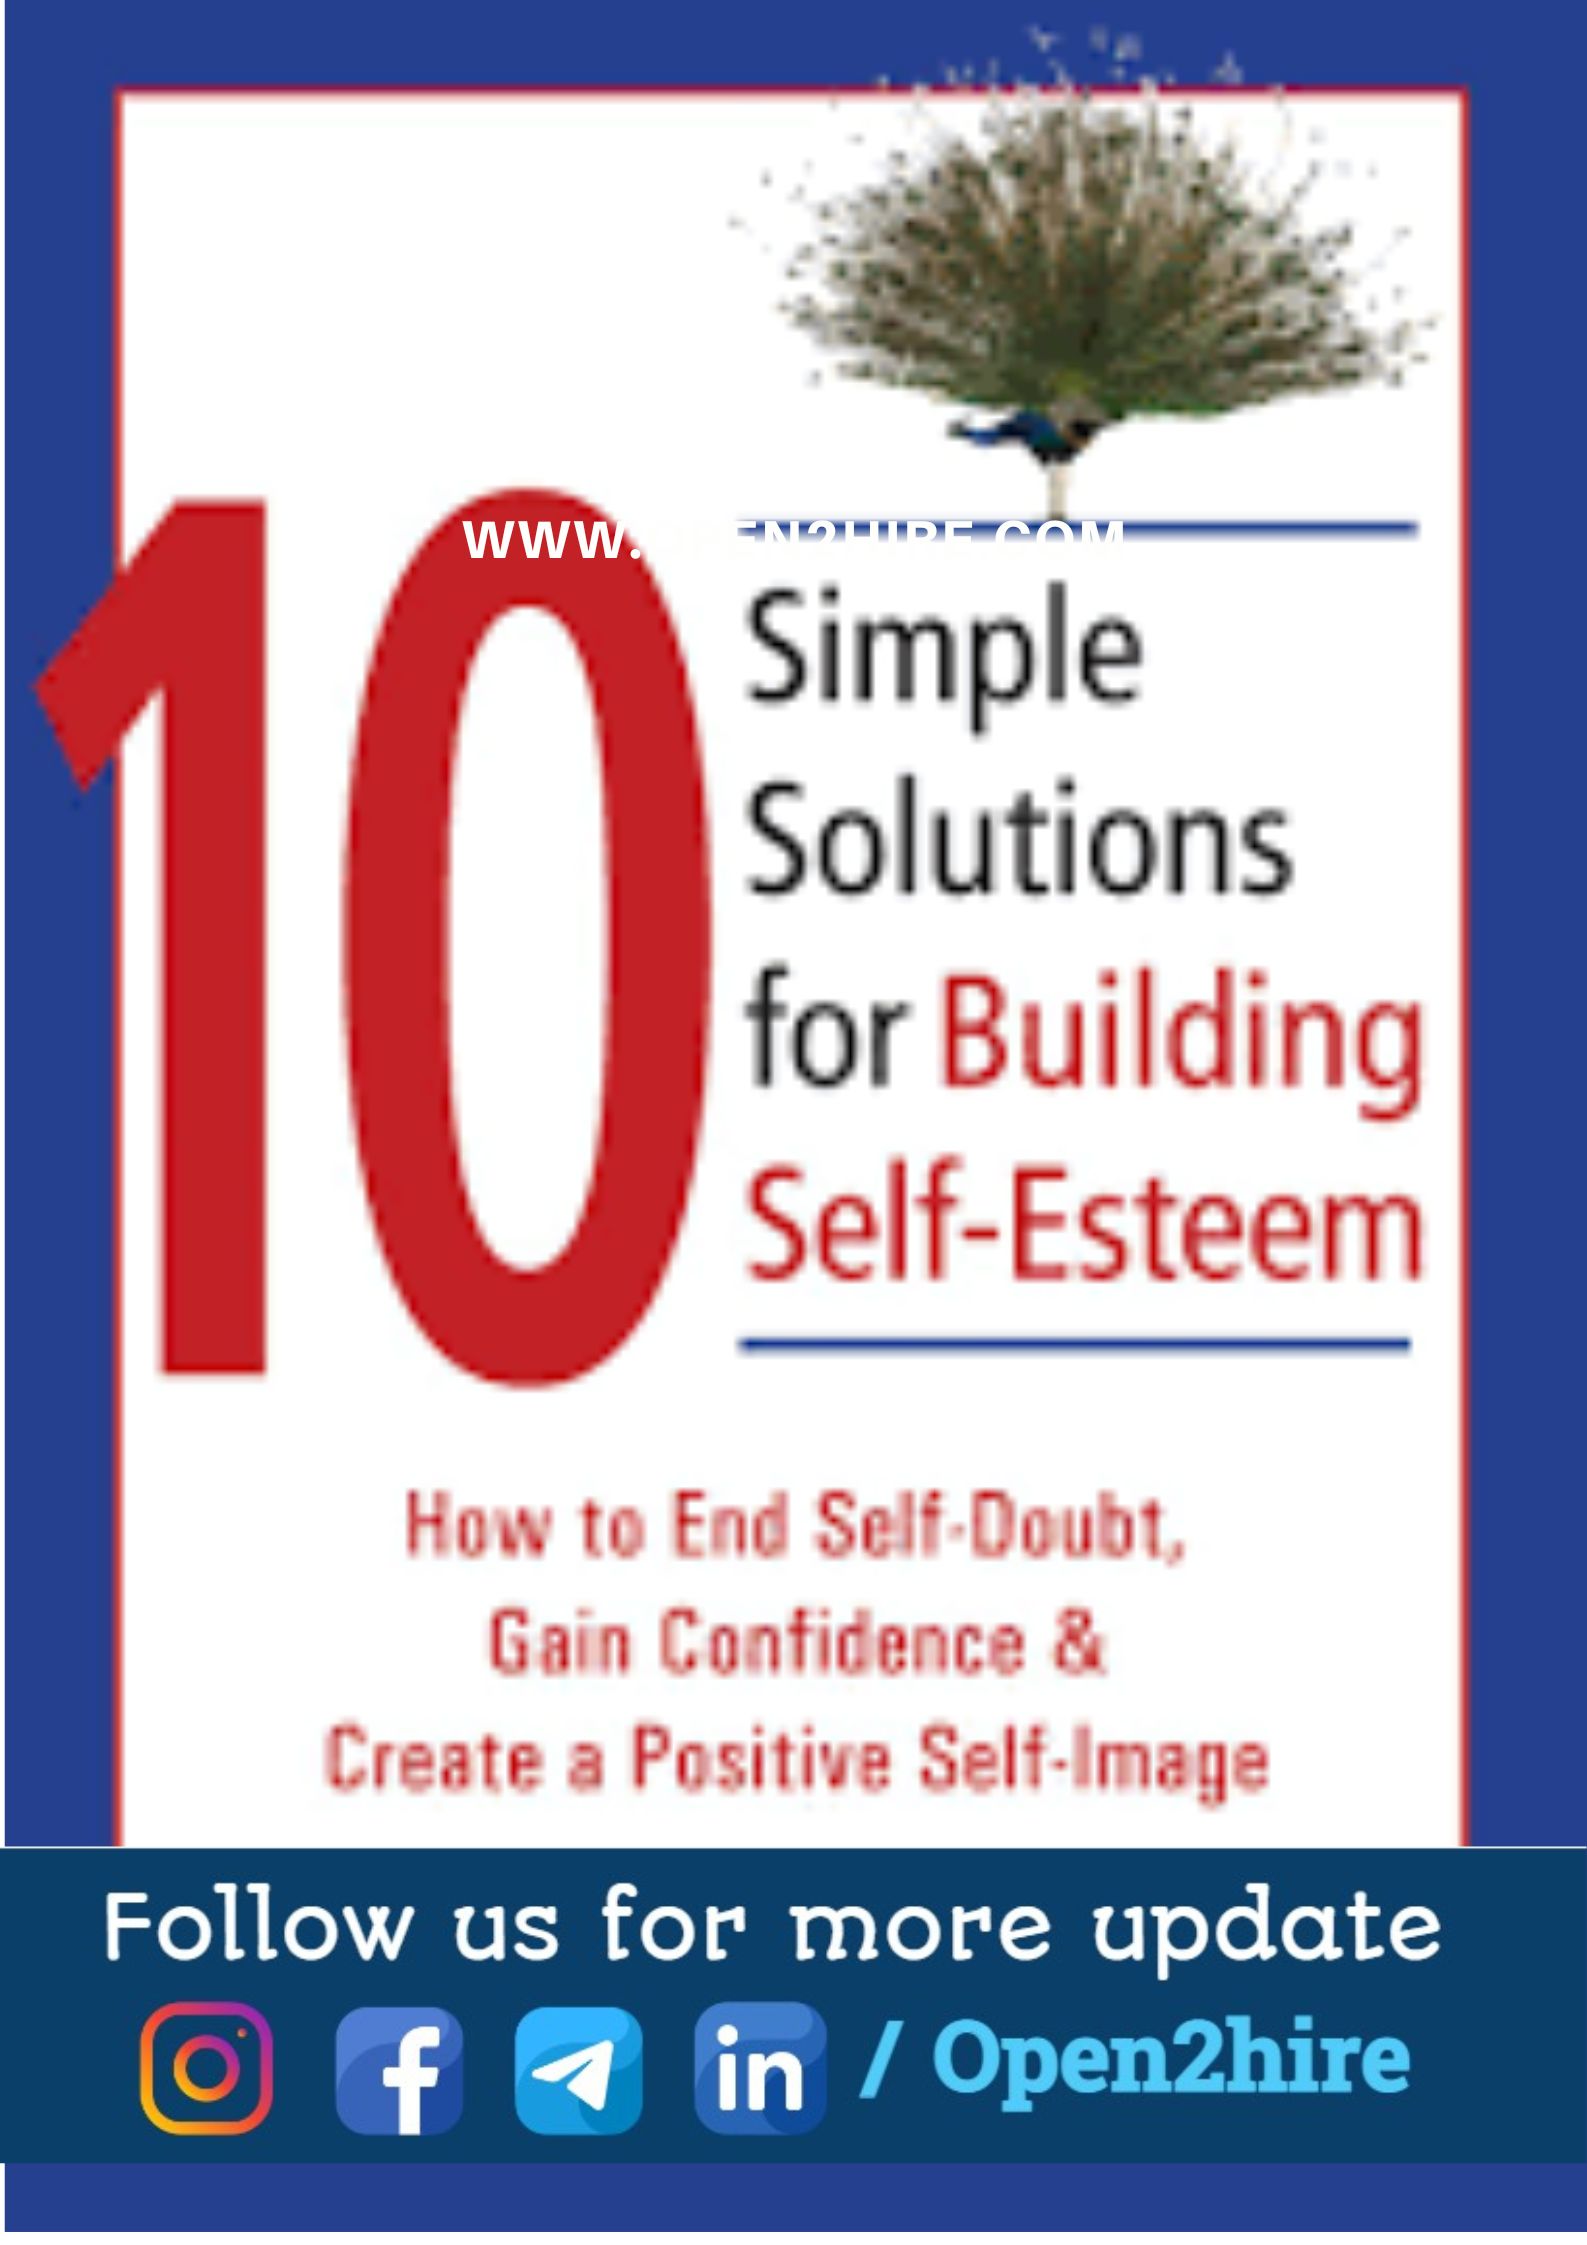 10 Simple Solutions for Building Self-Esteem